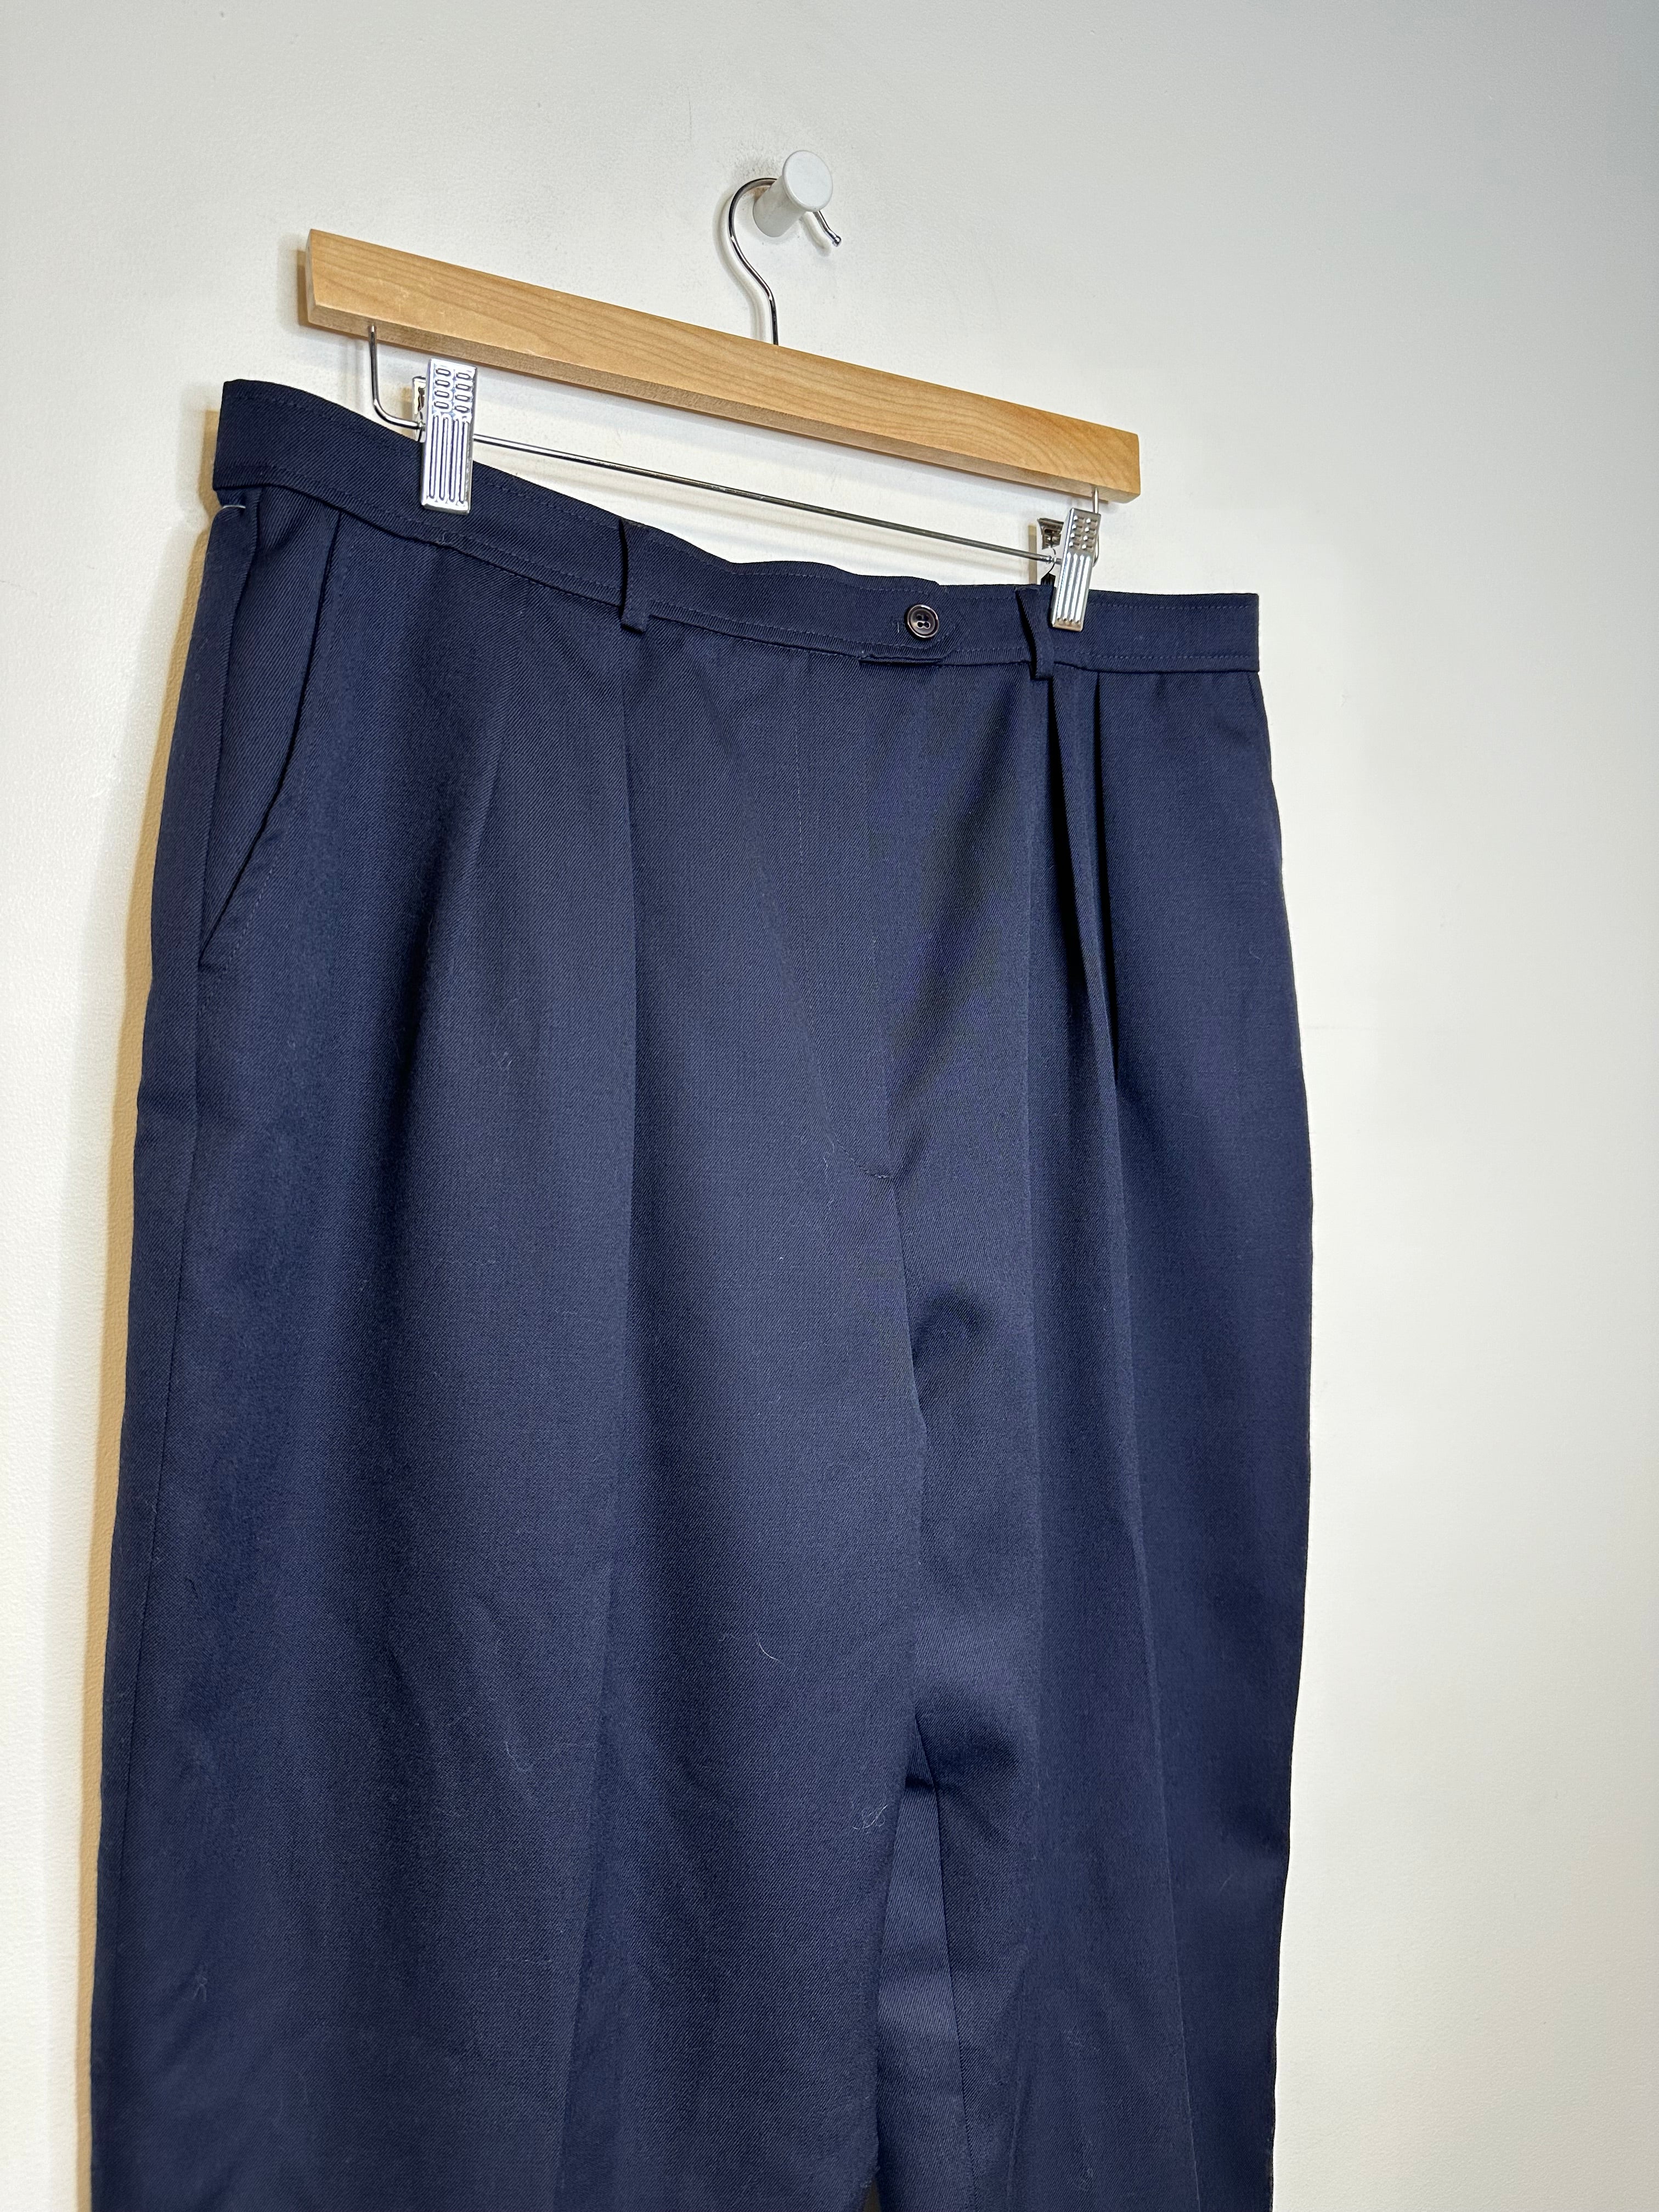 Vintage Navy Wool Pants - XL/36